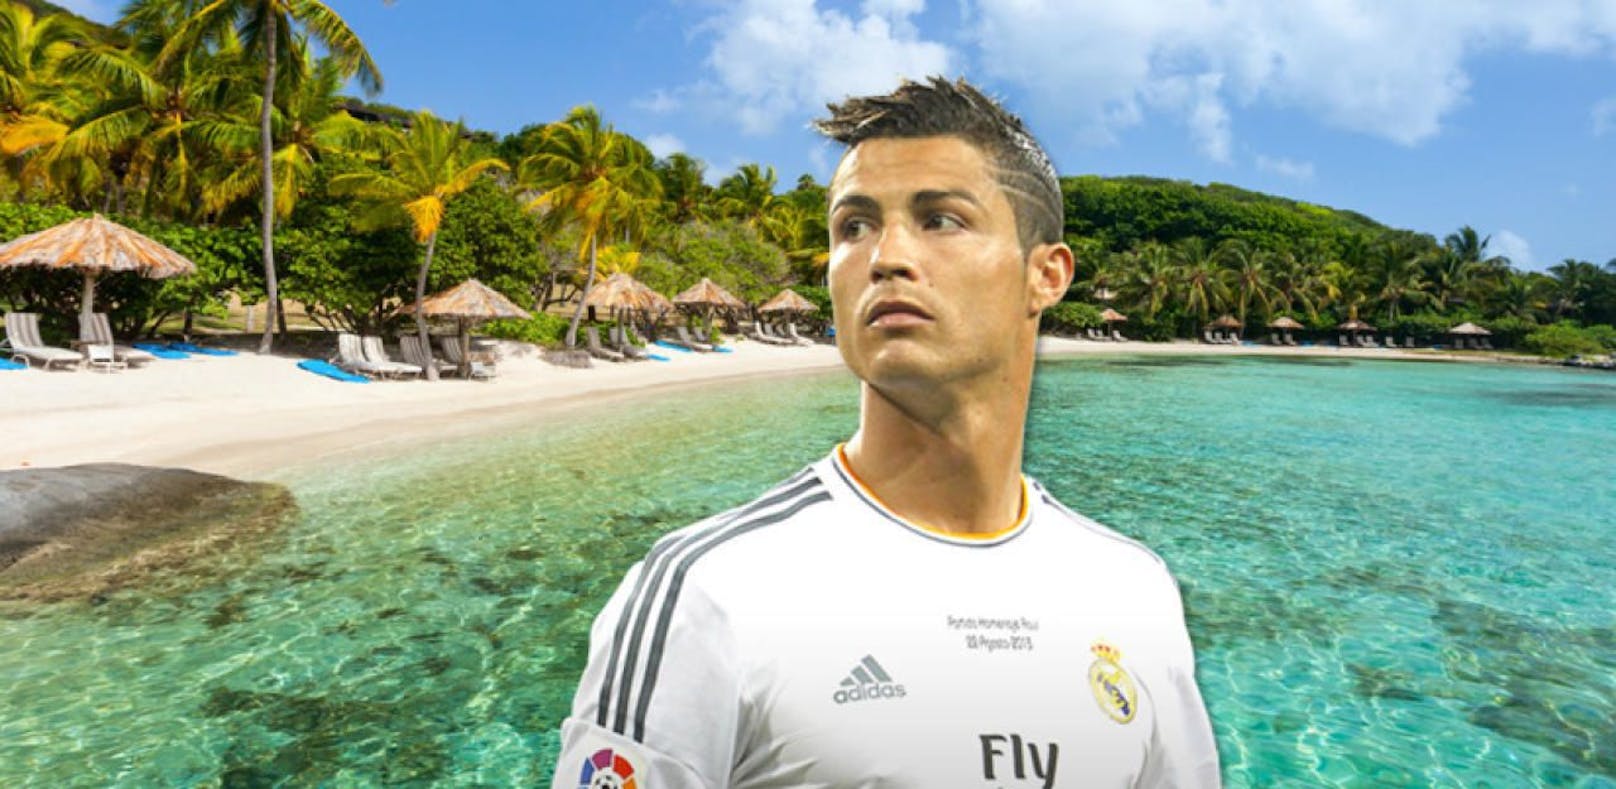 Steueraffäre um Ronaldo: Betrugsverdacht erhärtet